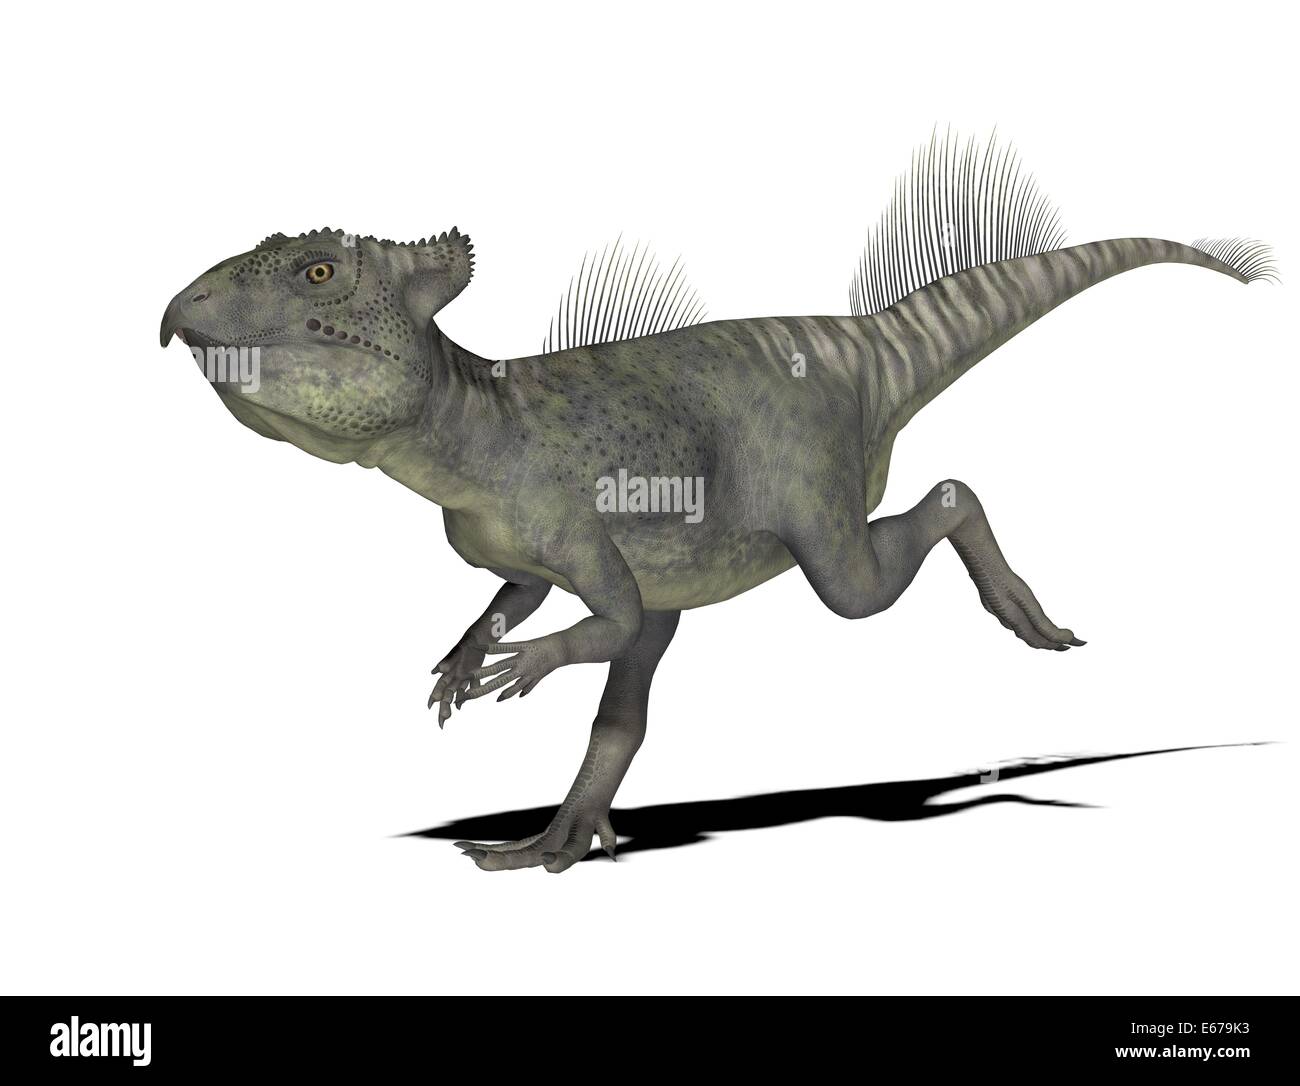 Dinosaurier Archaeoceratops / dinosaur Archaeoceratops Stock Photo